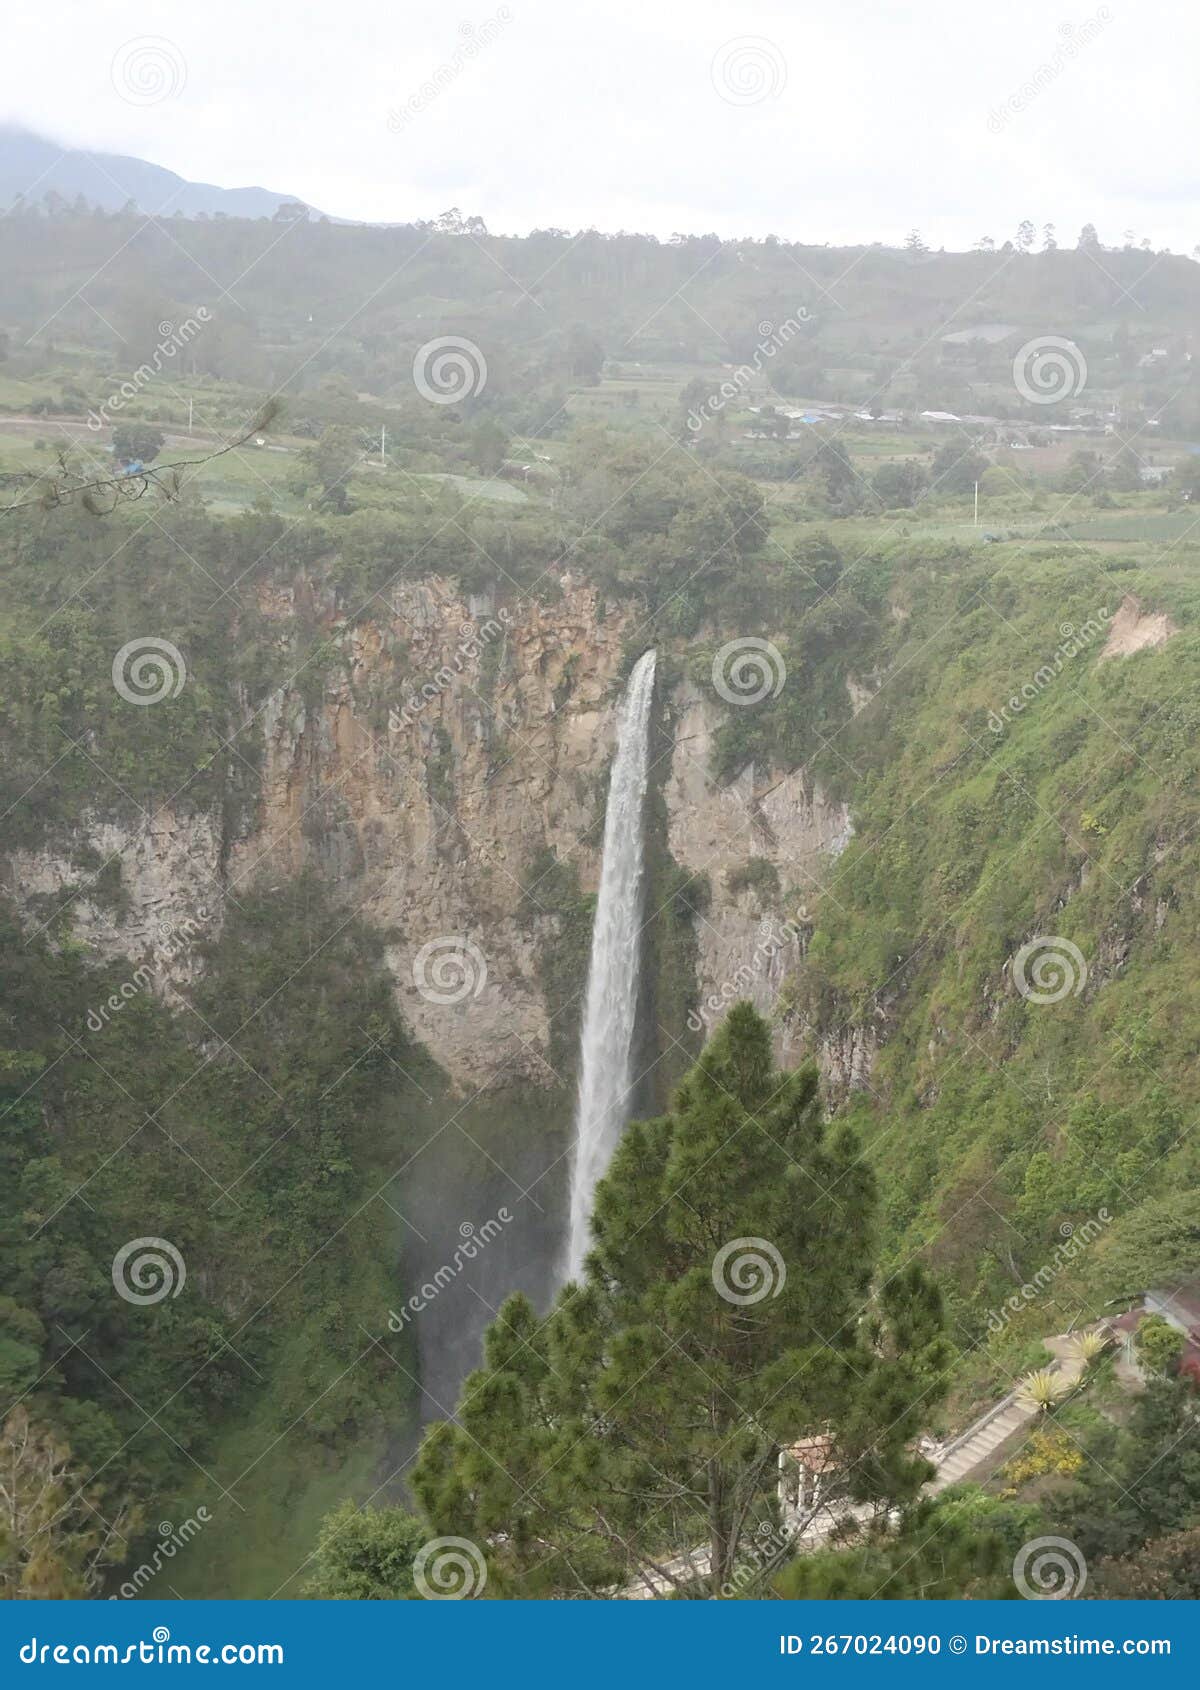 waterfall sipiso piso nort sumatera